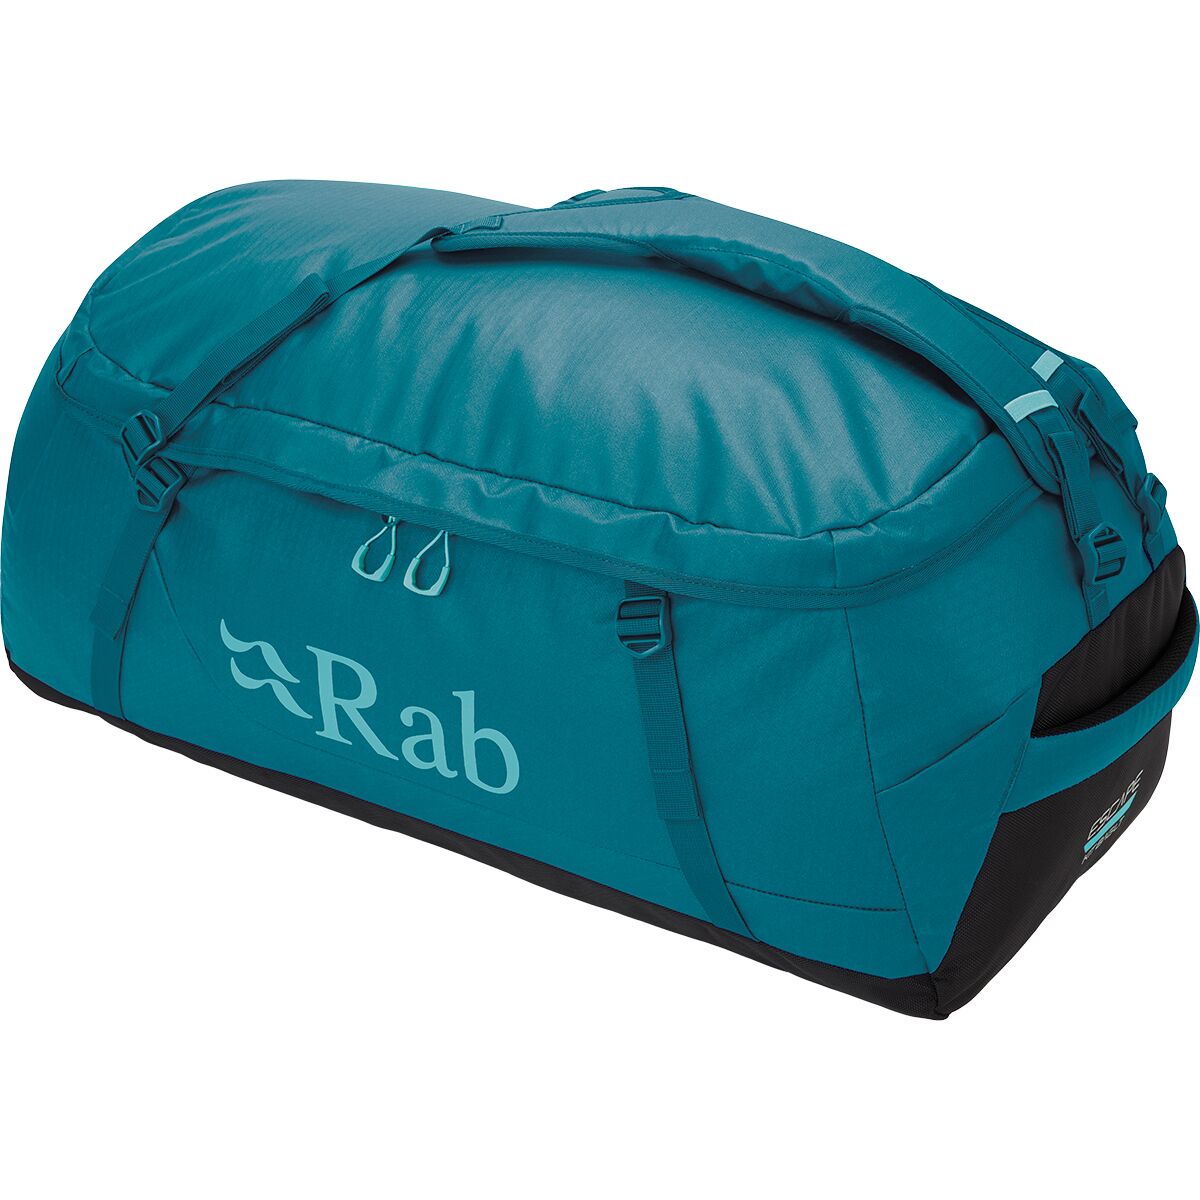 Rab Escape Kit Bag LT 70L Duffle Bag